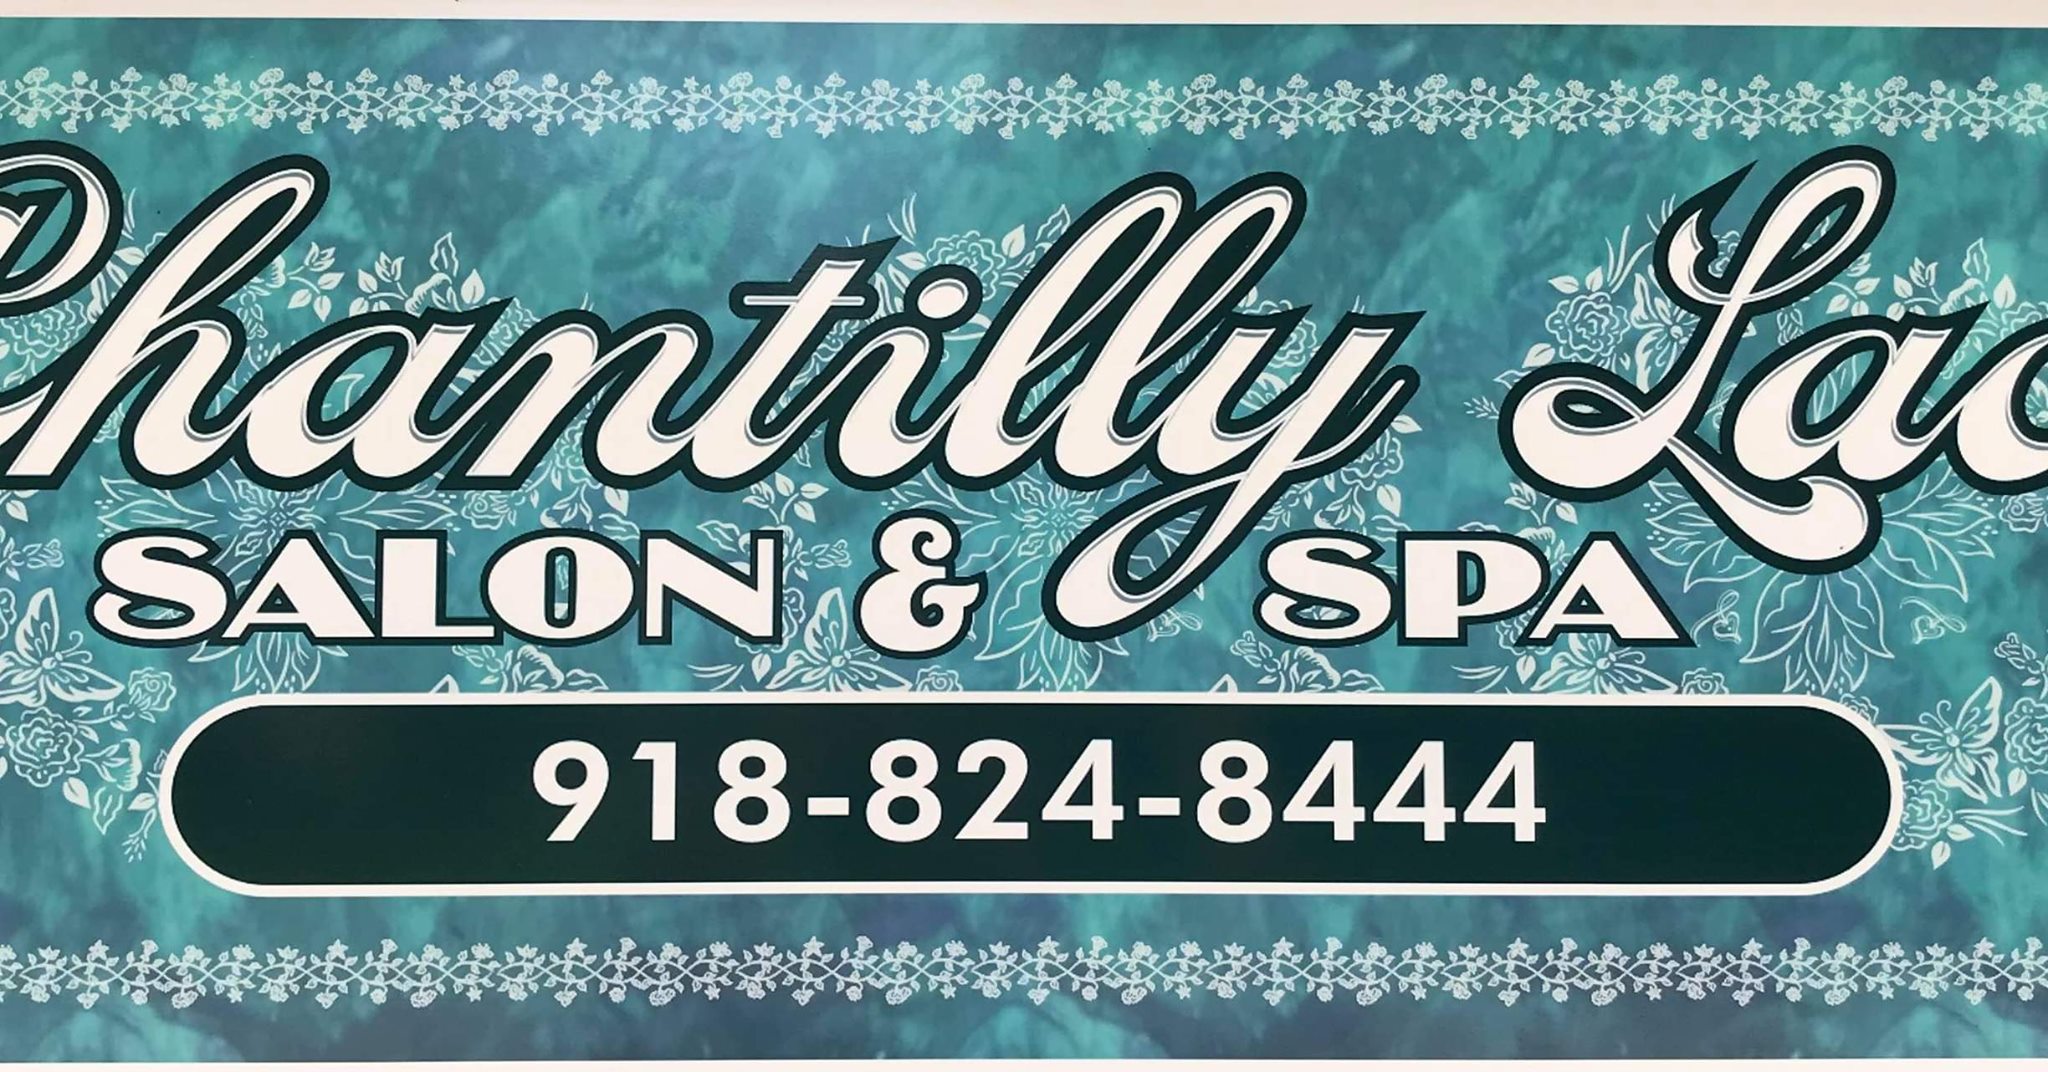 Chantilly Lace Salon and Spa 307 S Adair St, Pryor Oklahoma 74361